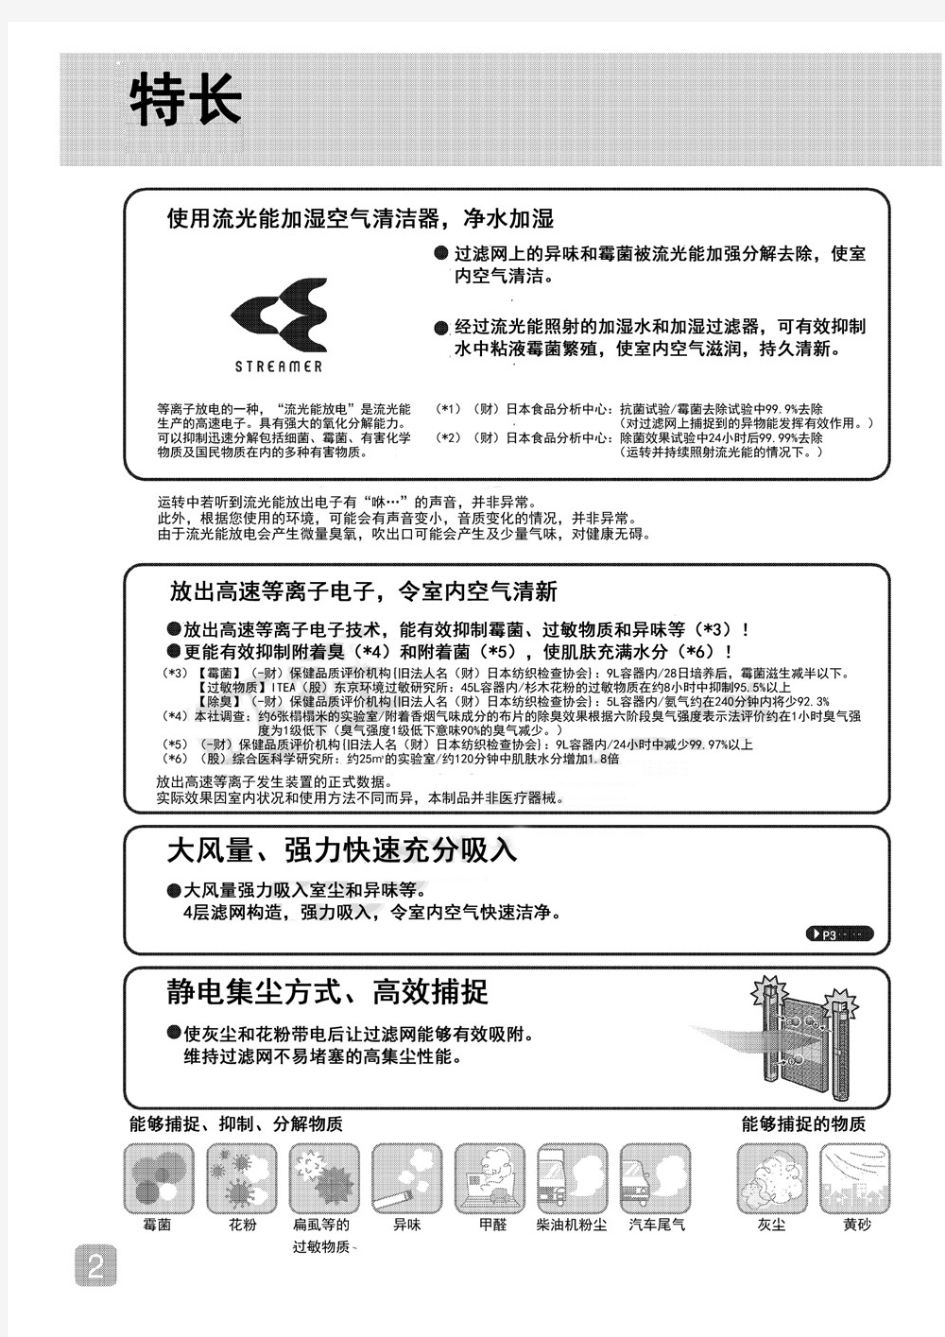 DAIKIN大金 ACK70N 空气净化器 中文说明书